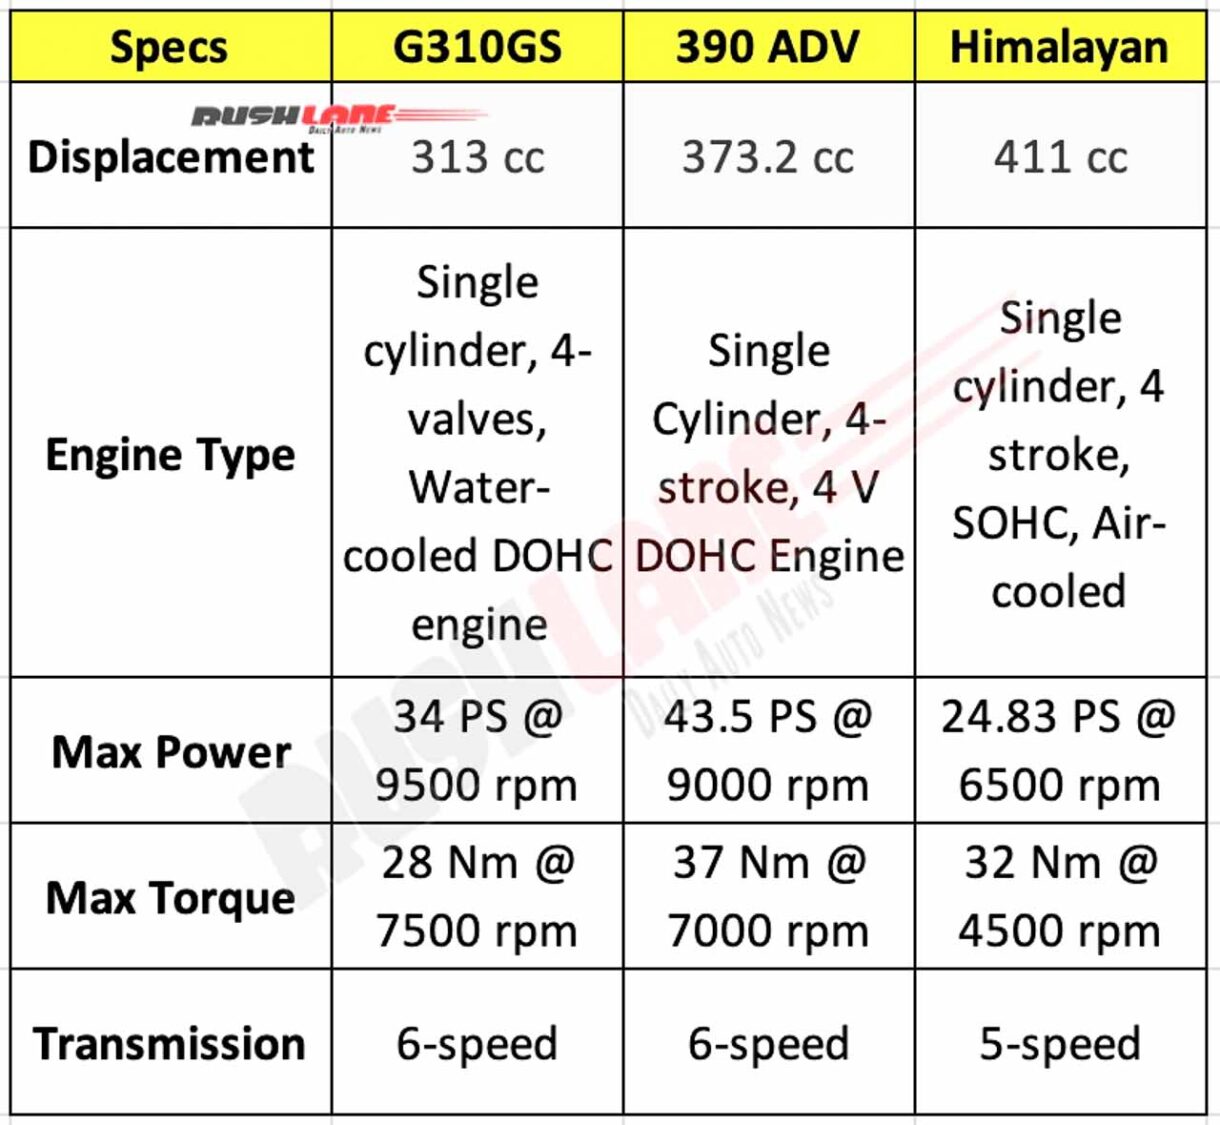 BMW G 310 GS Engine Specs vs Rivals